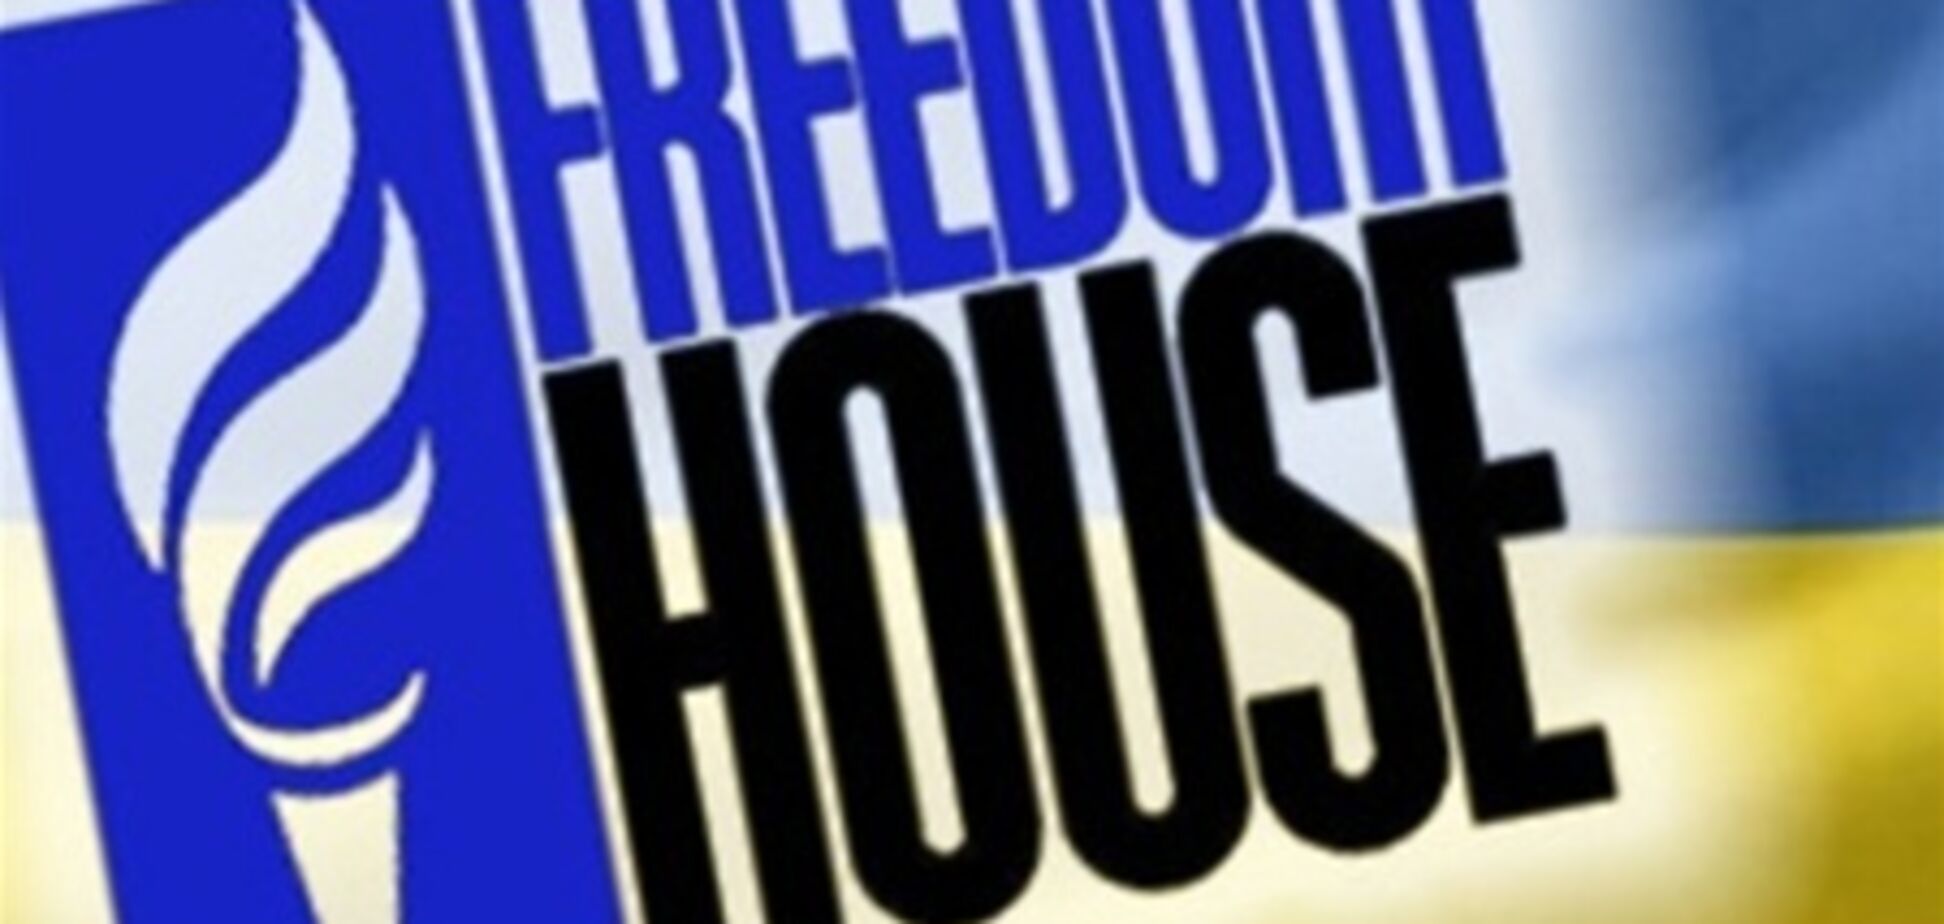 Freedom House: в Украине гибридная демократия